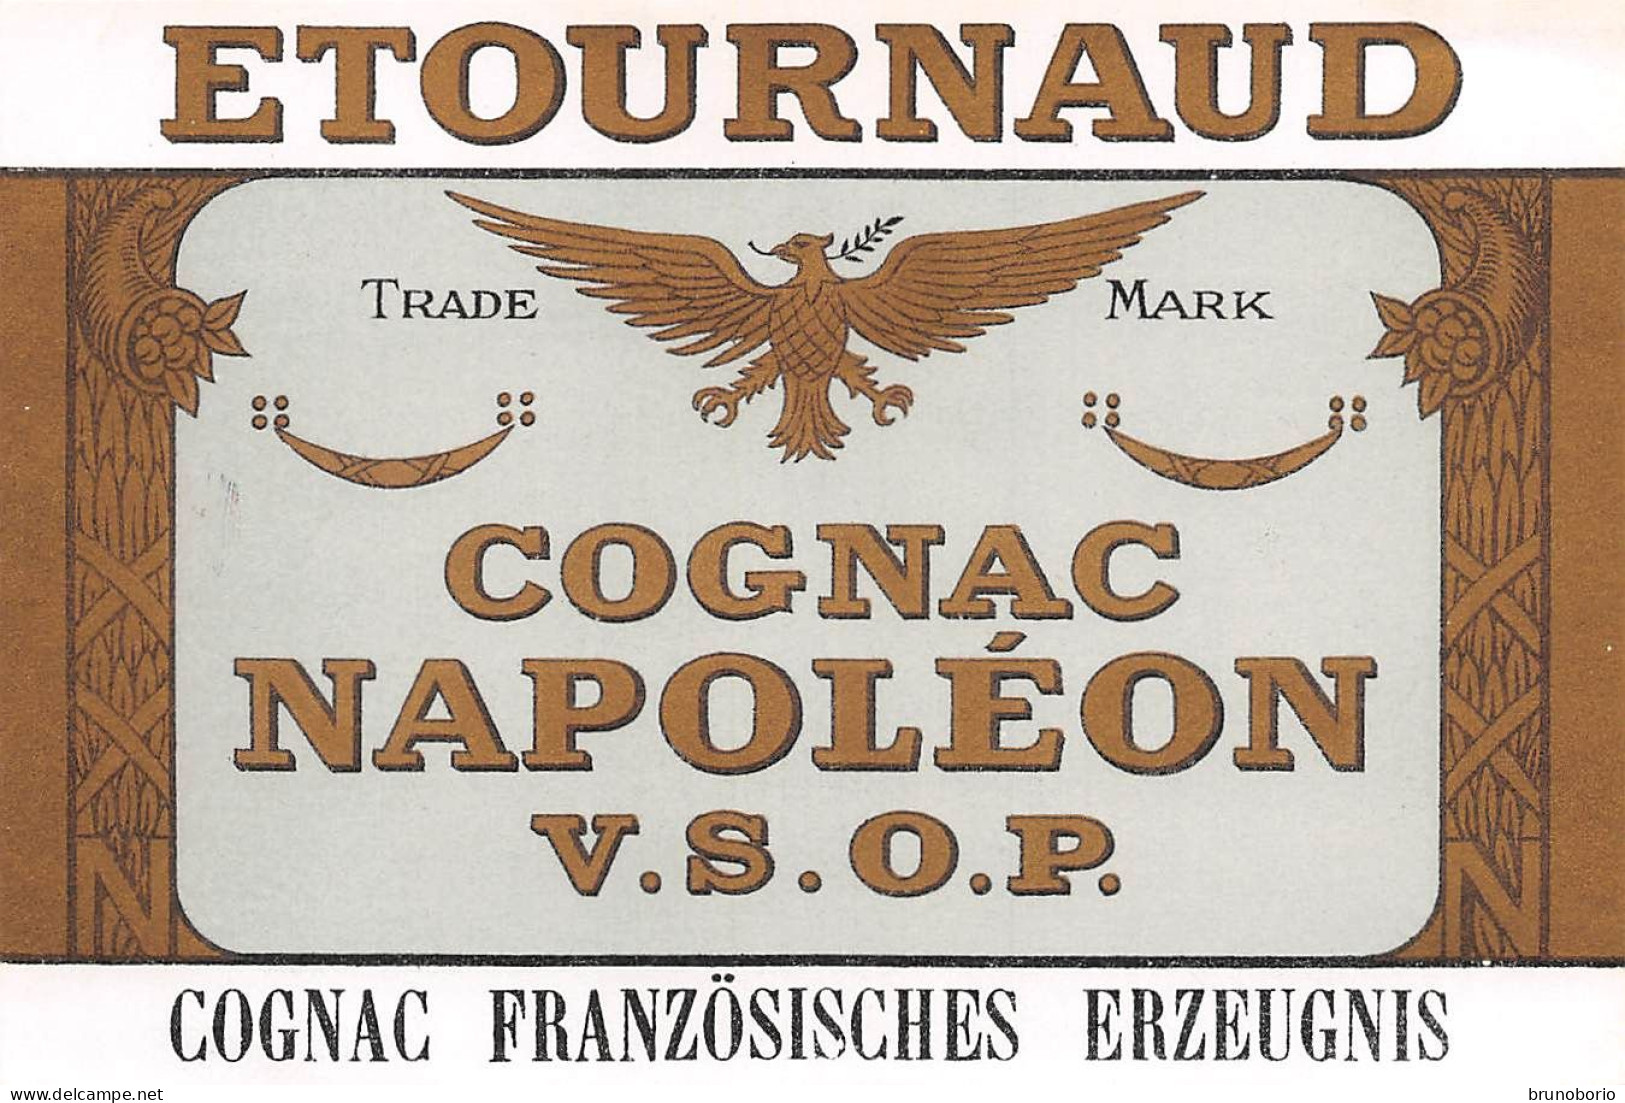 00047 "ETOURNAUD - COGNAC NAPOLEON V.S.O.P. - COGNAC FRANZOSISCHERS ERZEUGNIS" ETICH. ORIG. - Alkohole & Spirituosen